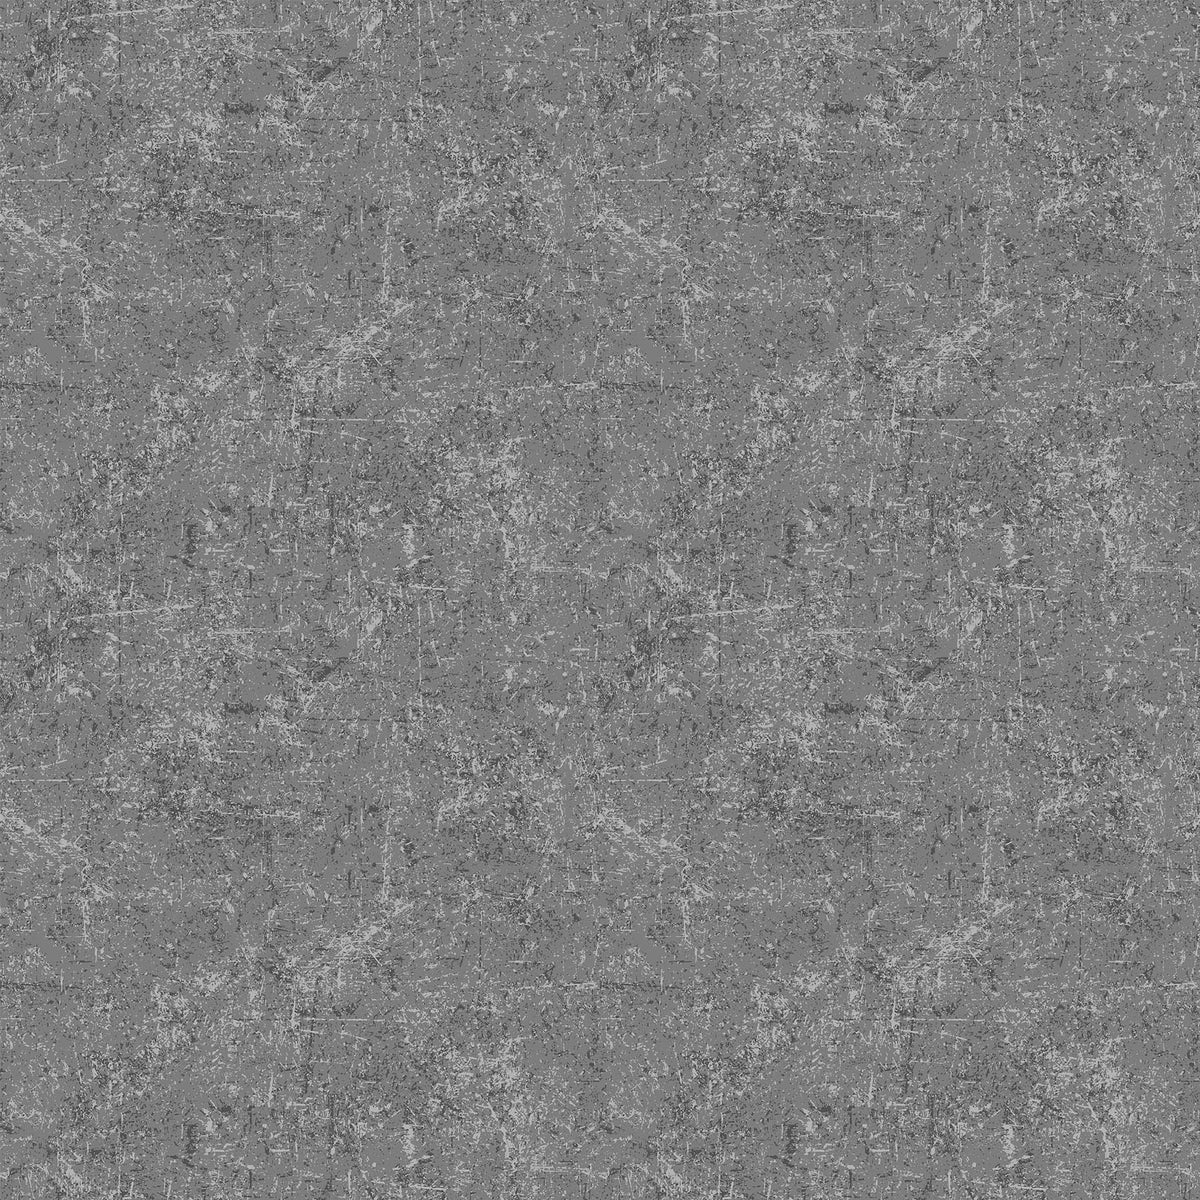 Glisten Quilt Fabric - Blender in Aluminum Gray - P10091-92